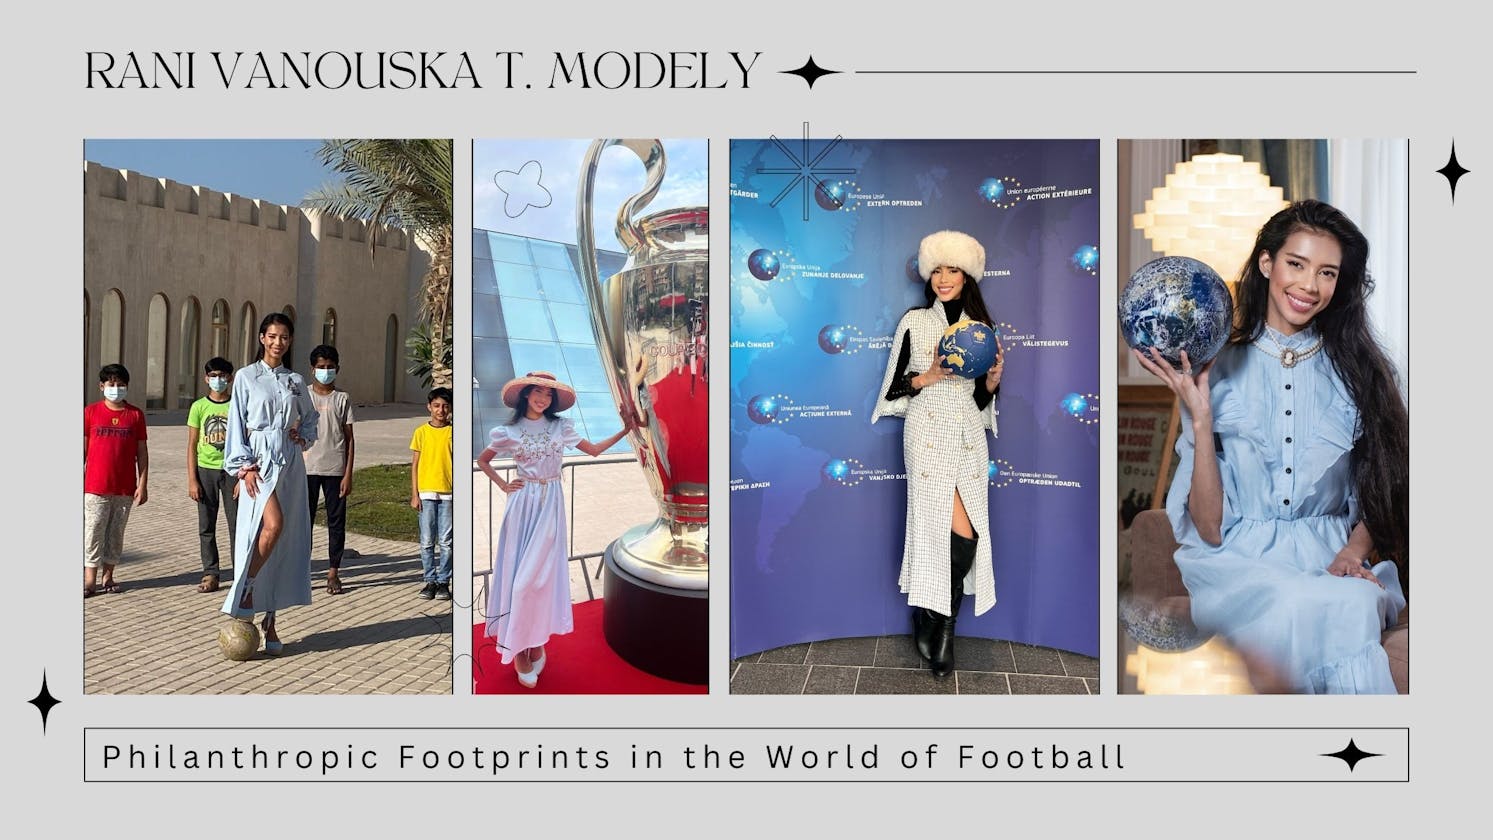 Rani Vanouska T. Modely - Philanthropic Footprints in the World of Football